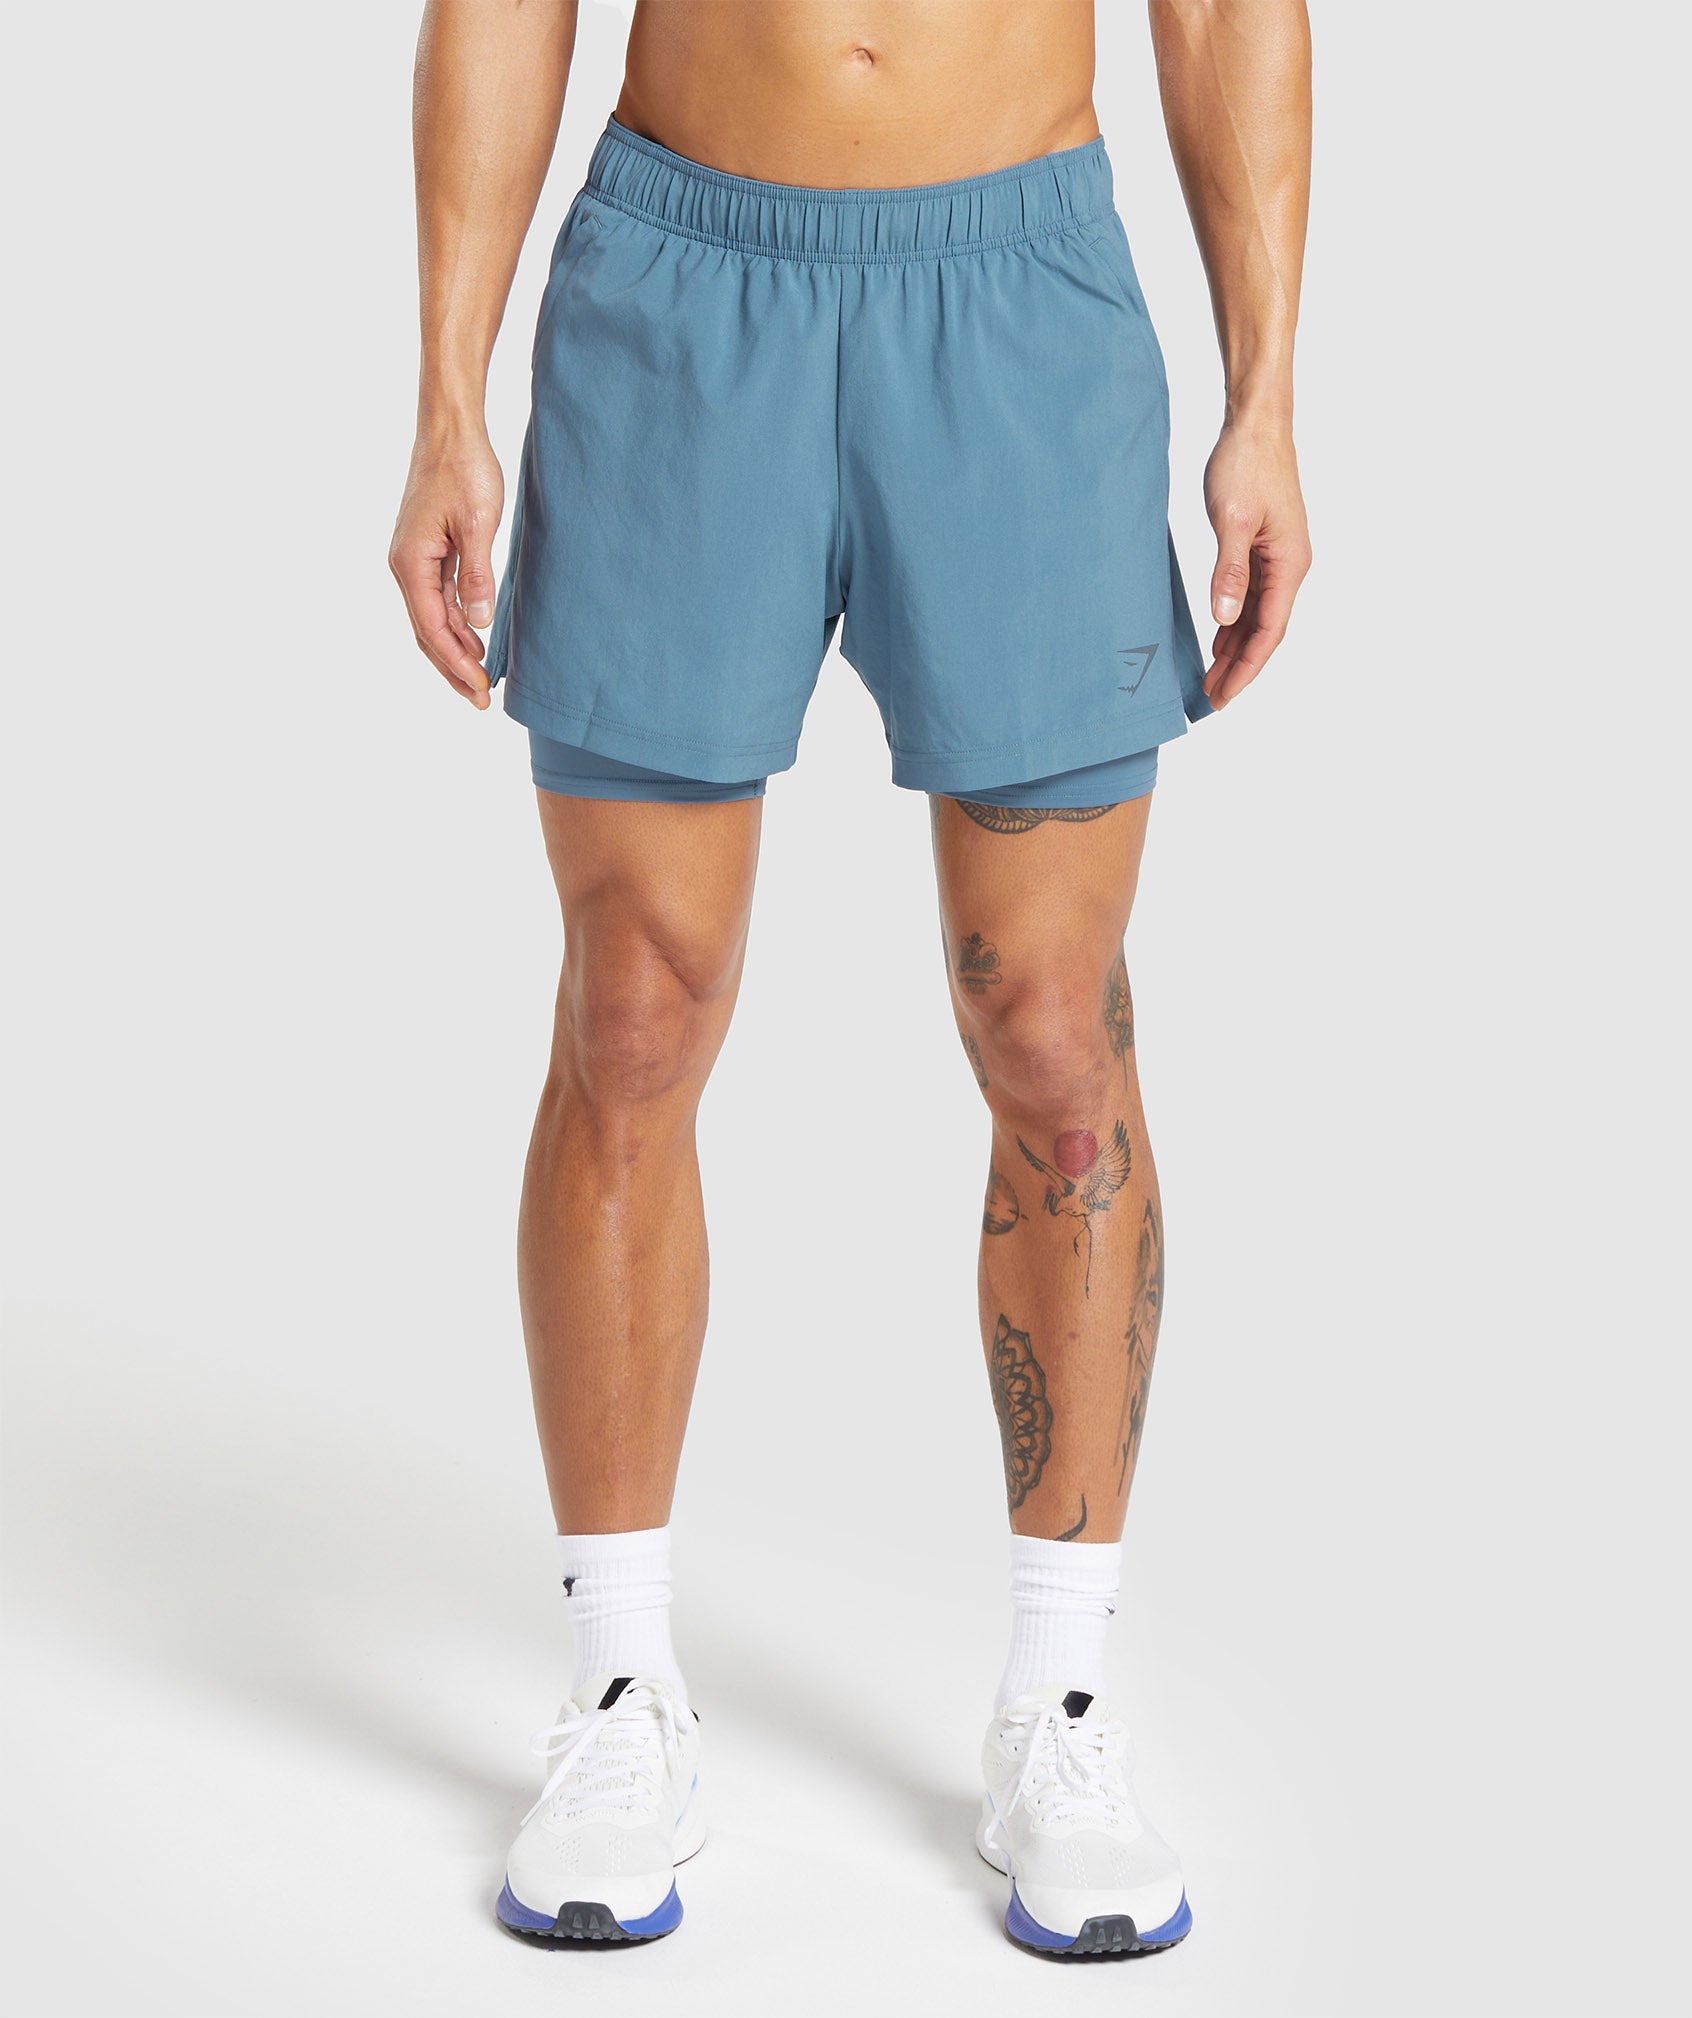 Karuedoo Mens Cargo Shorts Casual Summer Work Half Pants Running Sport  Jogging Sweatpants - Walmart.com